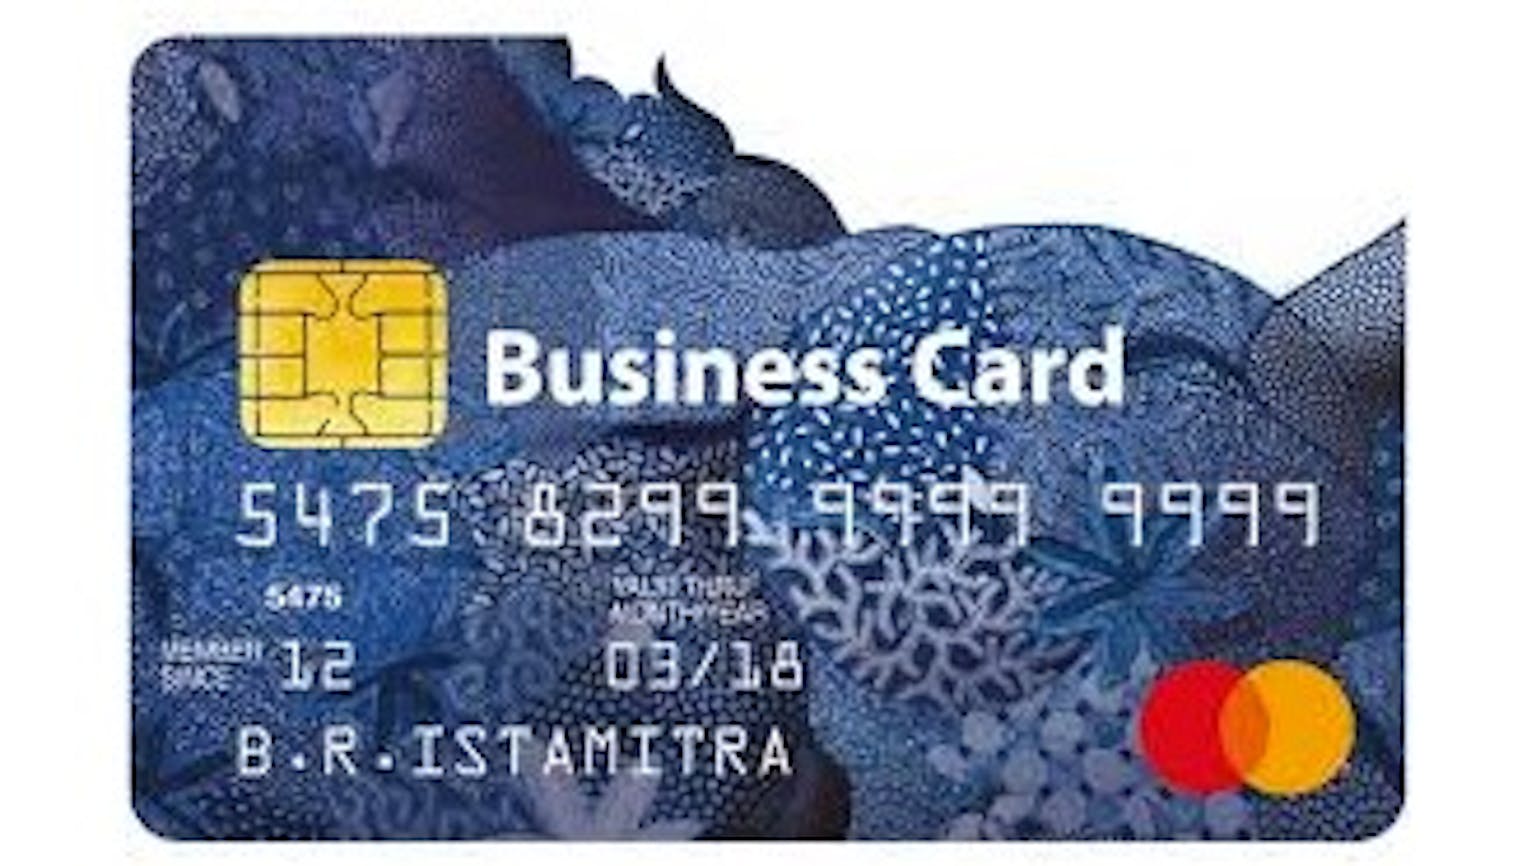 BRI Business Card